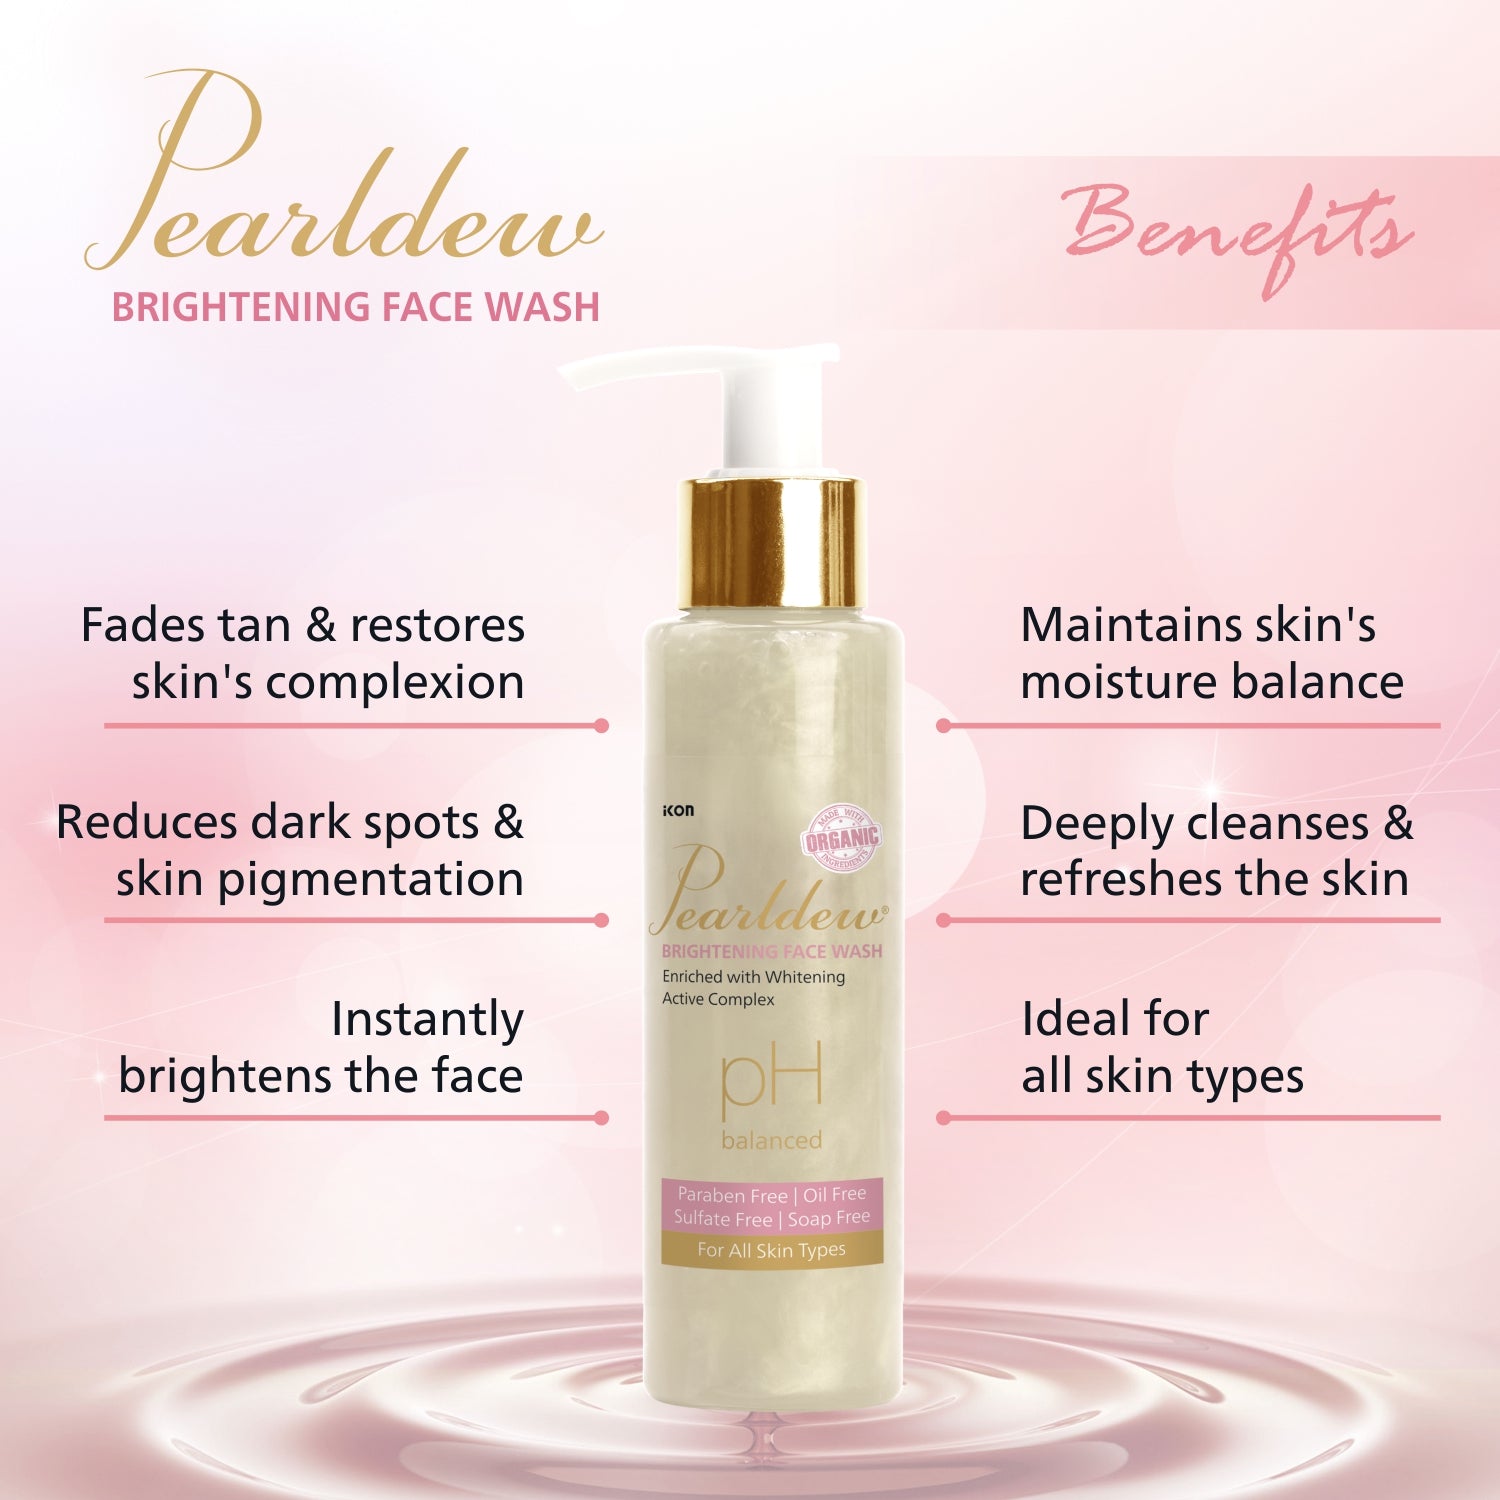 Pearldew Brightening Face Wash (100 ml)